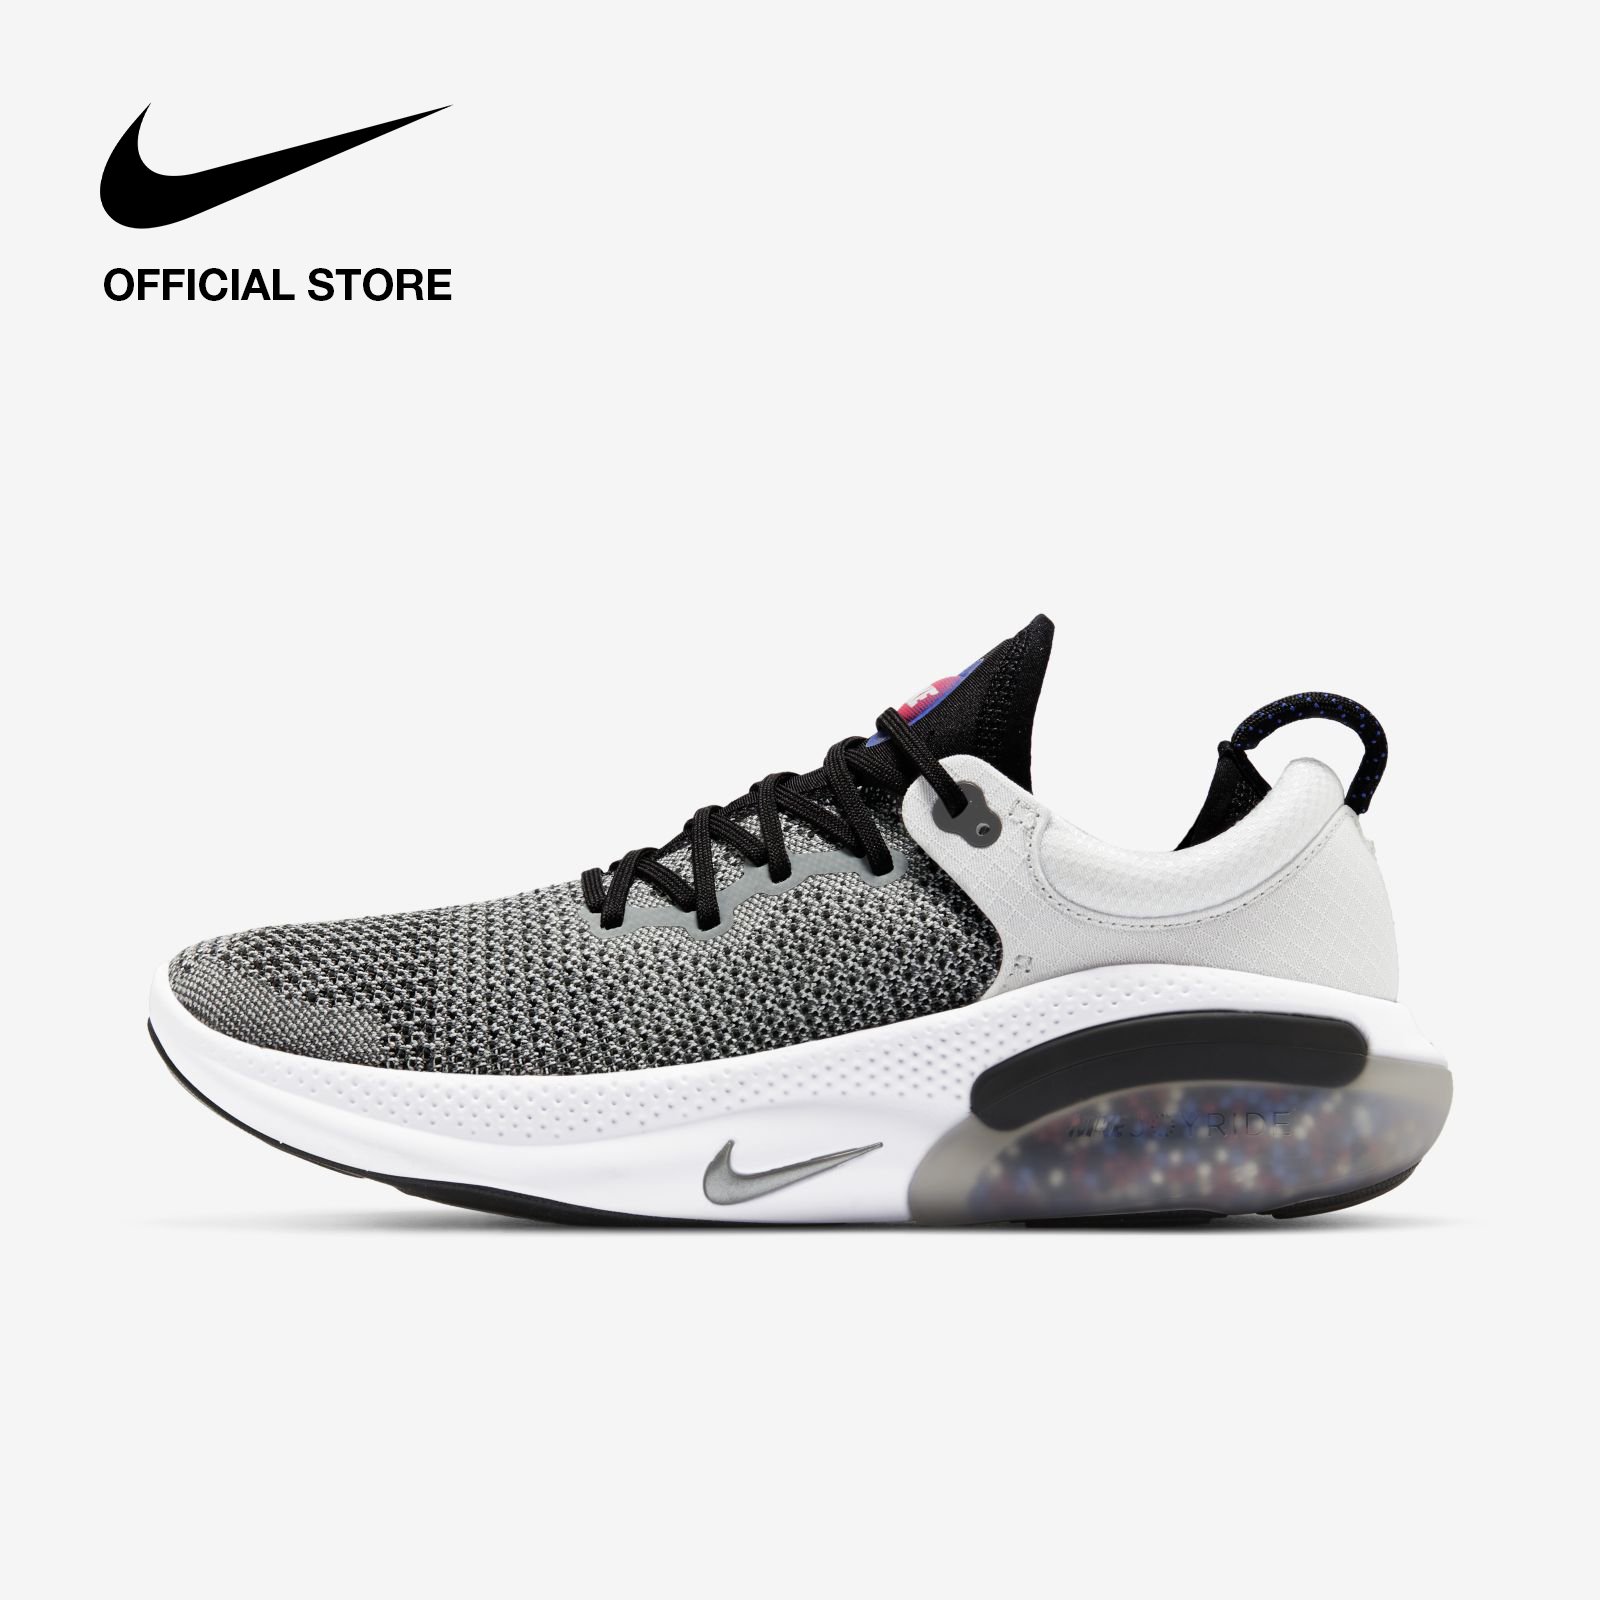 Nike Men's Joyride Run Flyknit Running Shoes - Pure Platinum ไนกี้ รองเท้าวิ่งผู้ชาย จอยไรด์ รัน ฟลายนิท - สีเทา